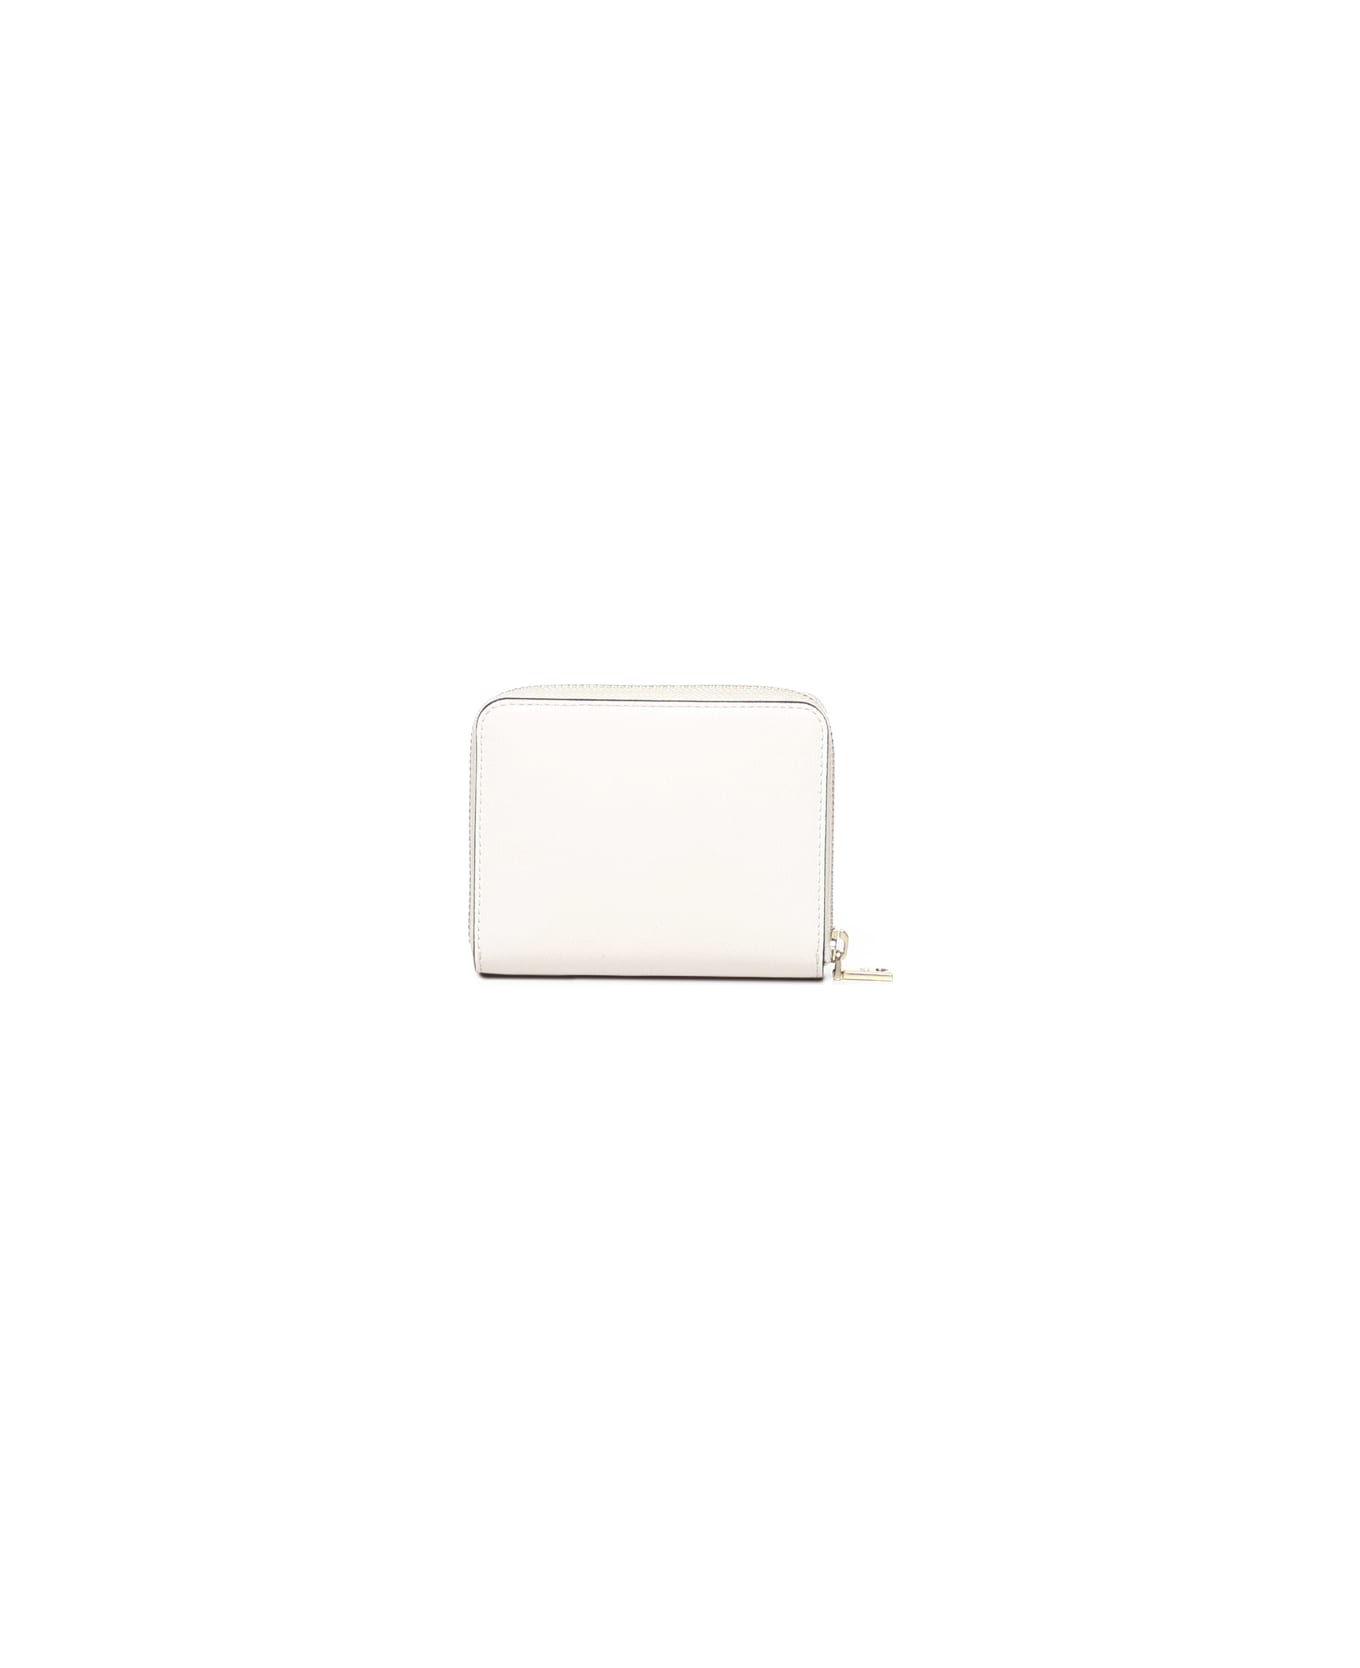 Love Moschino Bi-fold Wallet With Logo - Ivory 財布